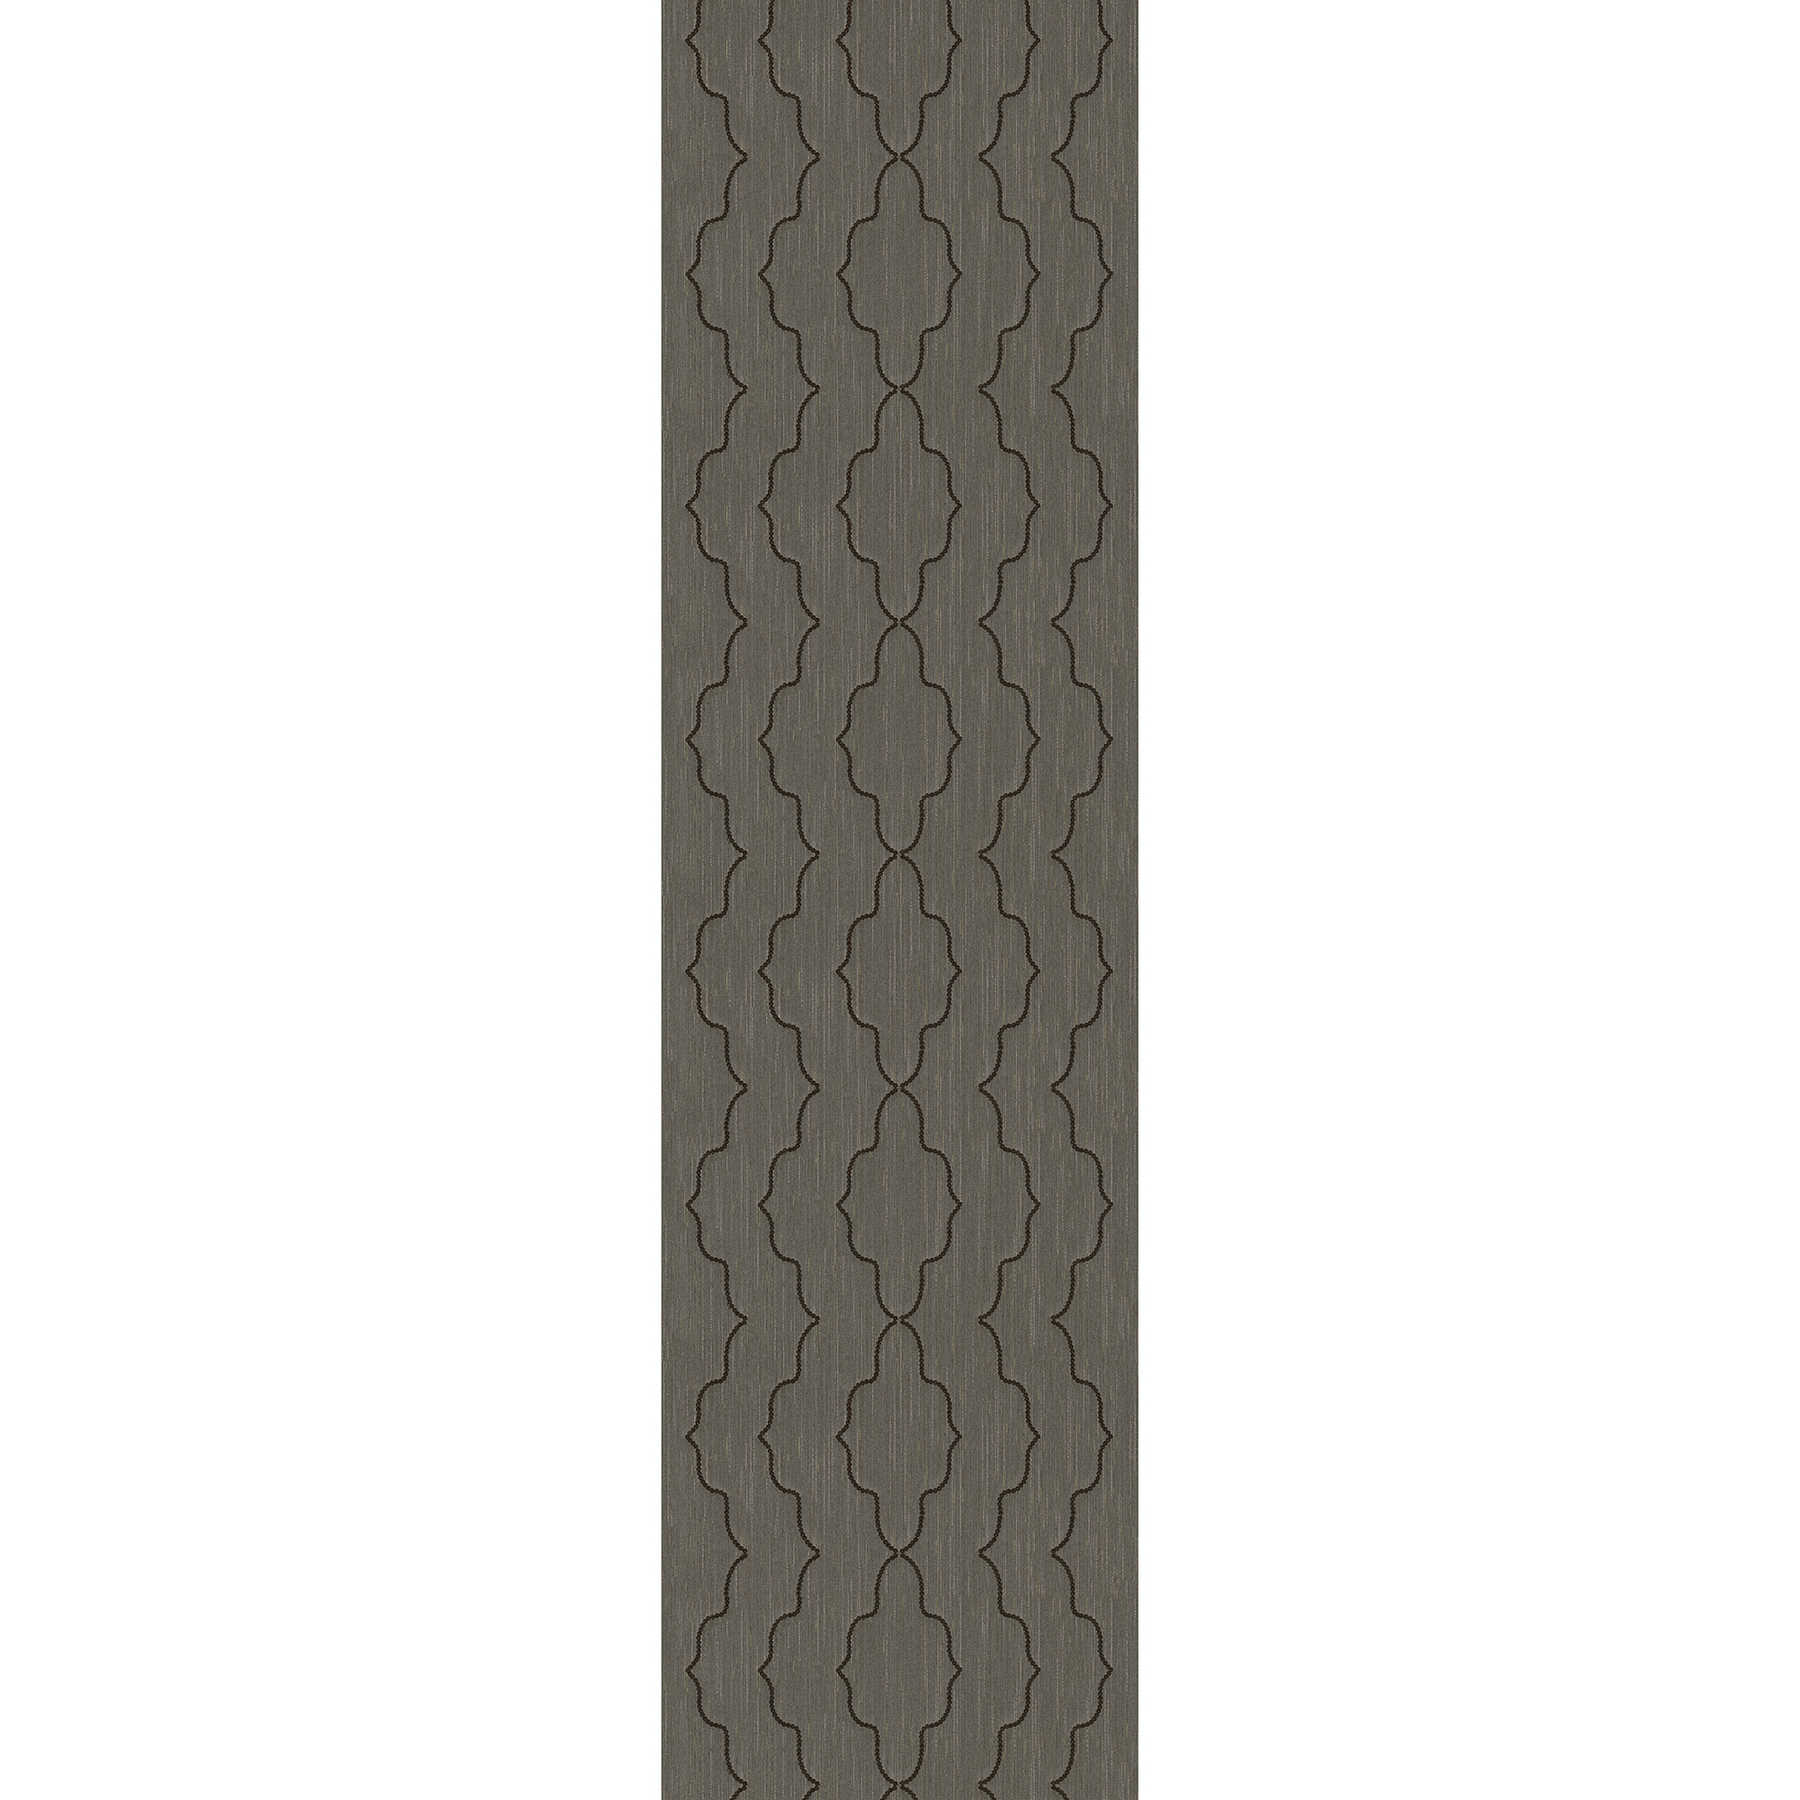         Graphic wallpaper with sequins & metallic effect - grey, brown, black
    